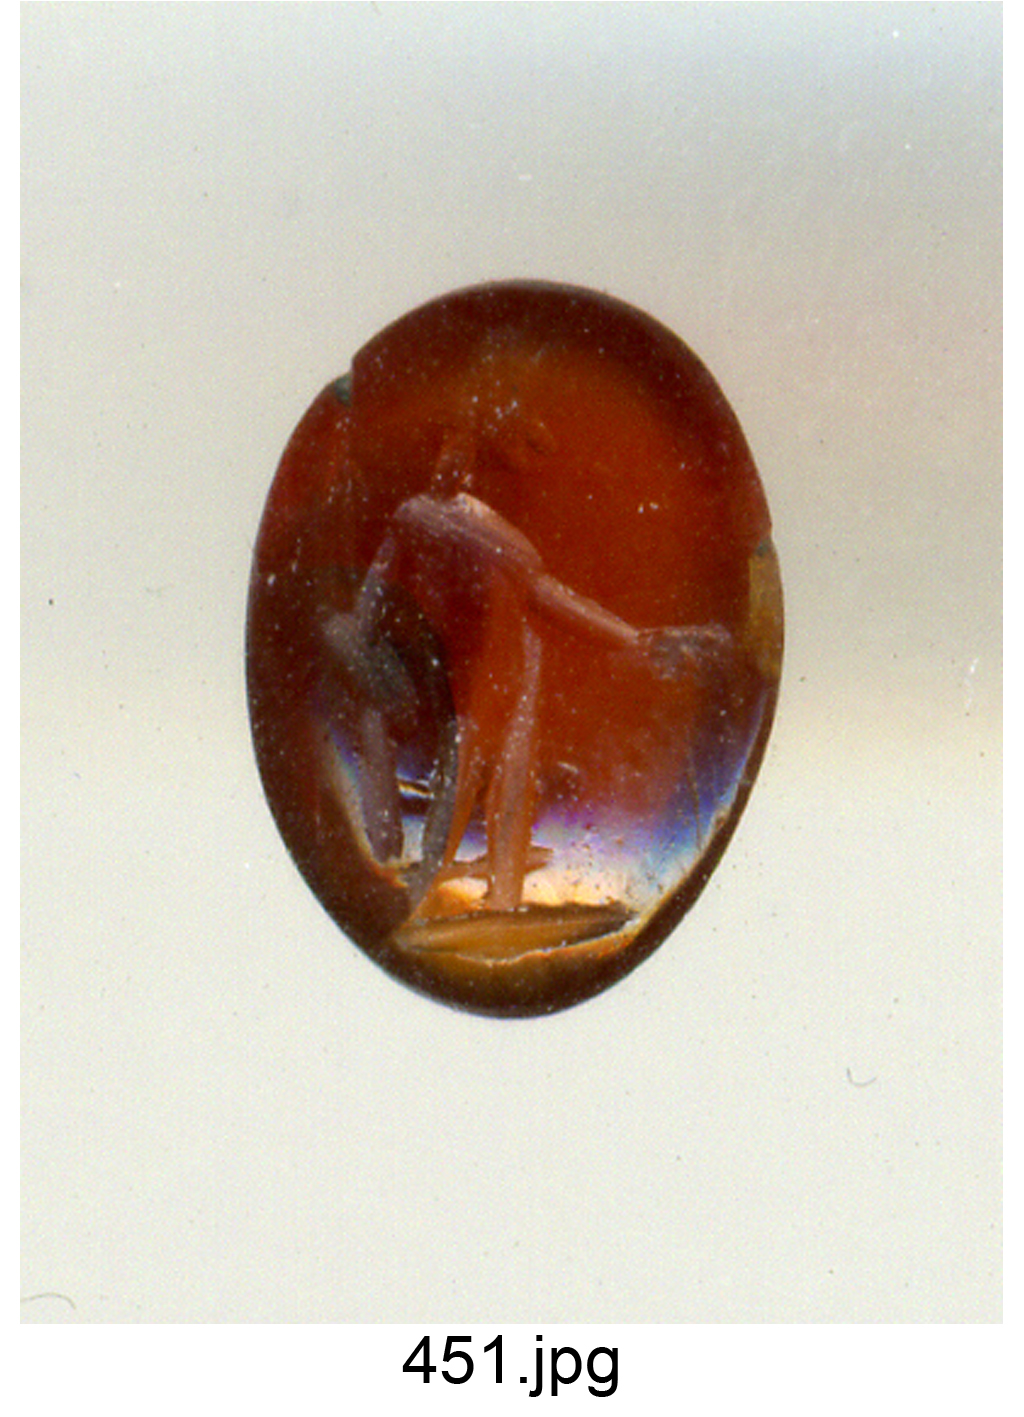 figura maschile (gemma) - produzione romana (secc. III/ IV)